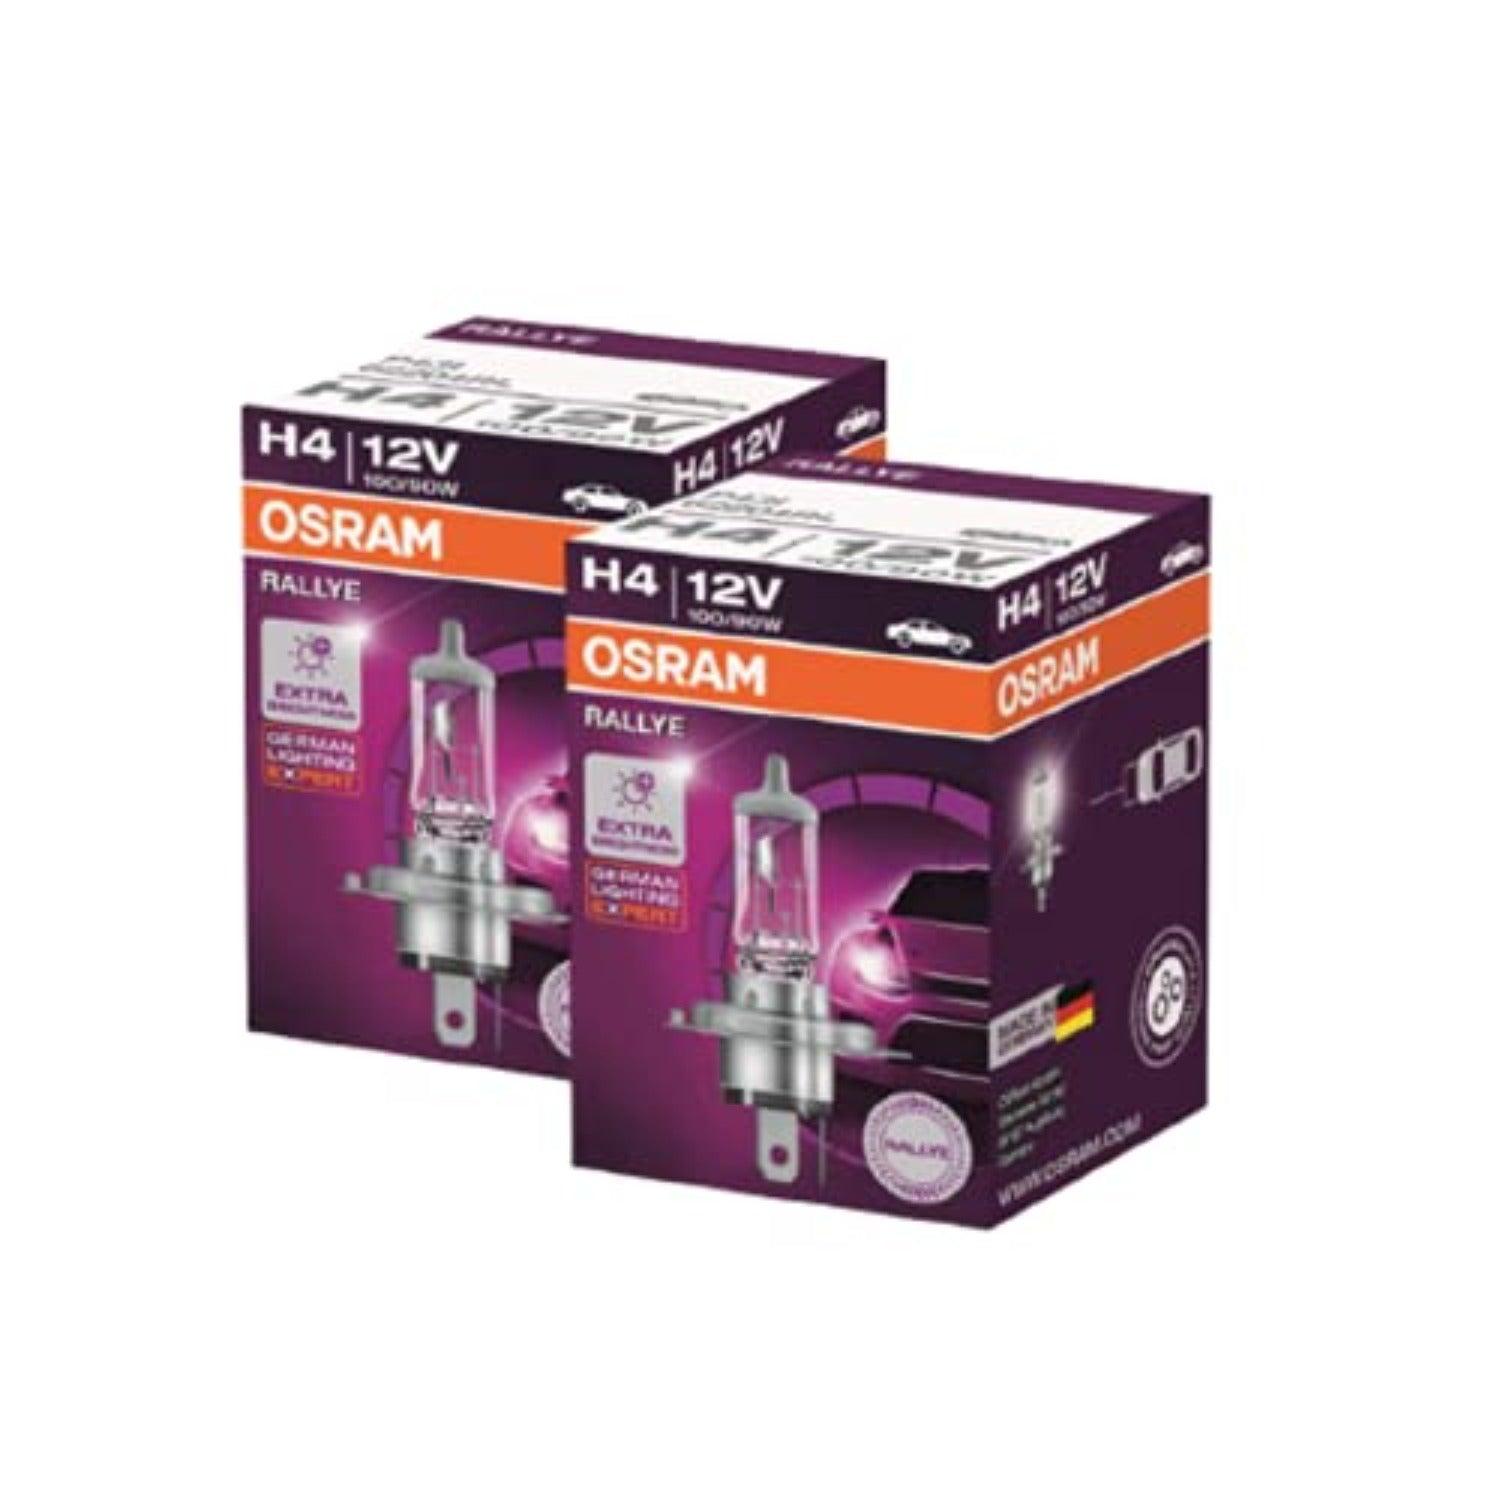 OSRAM Classic H4 Halogen Lamp Headlight Bulb (12V, 100/90W P43t, Pack of 2  Bulbs) Headlight Car Halogen (12 V, 90 W)